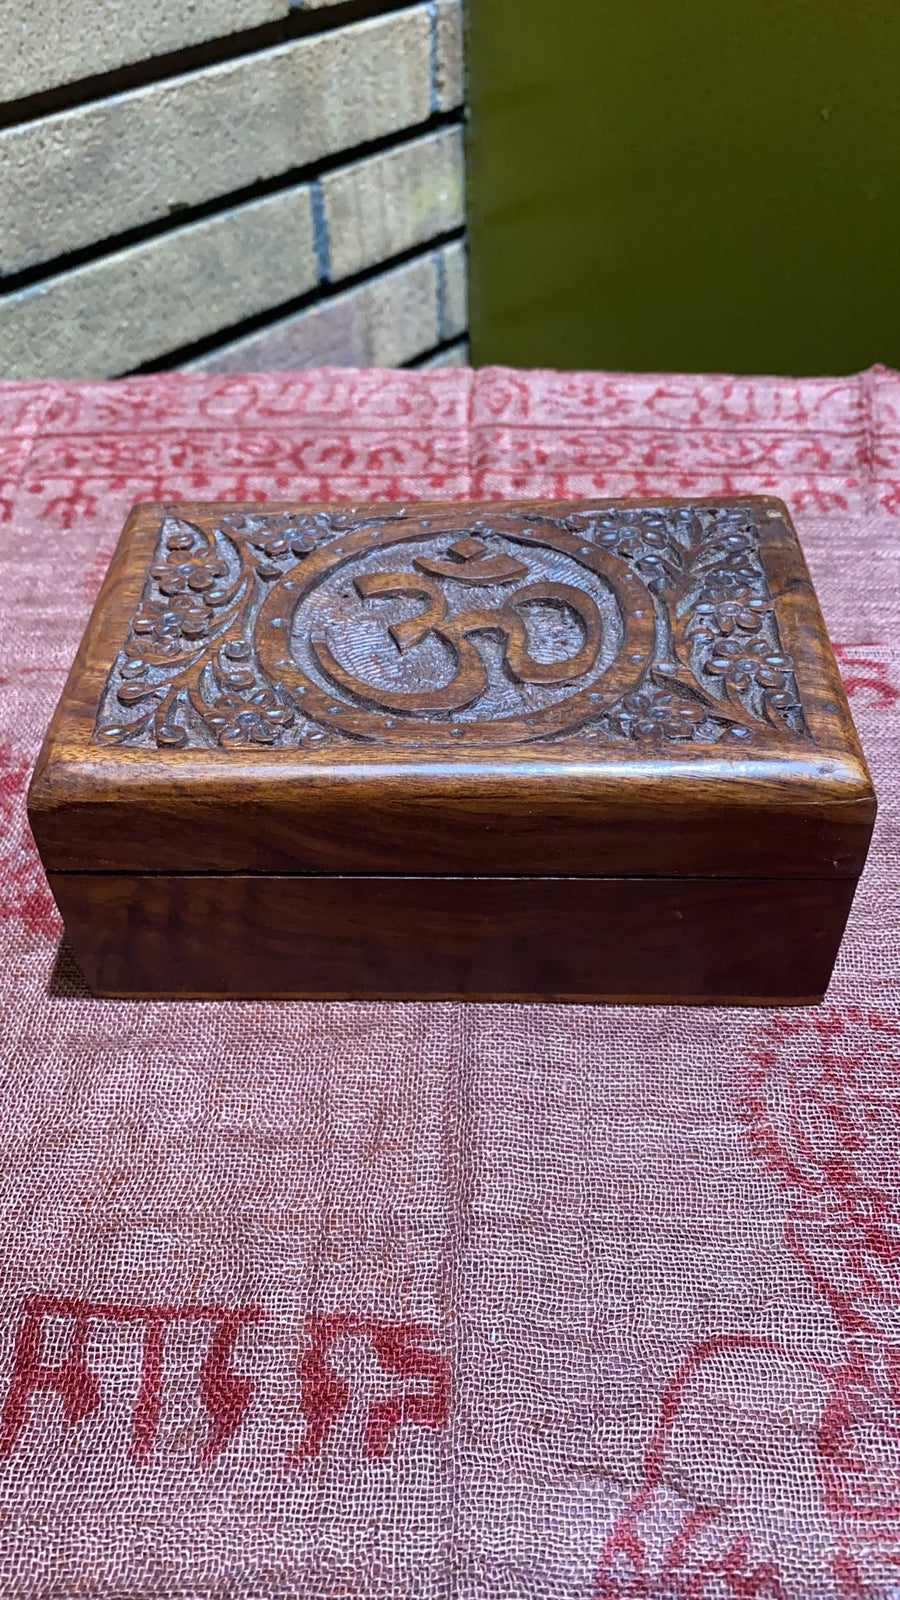 Small Wooden Boxes With Lids, Katmandu